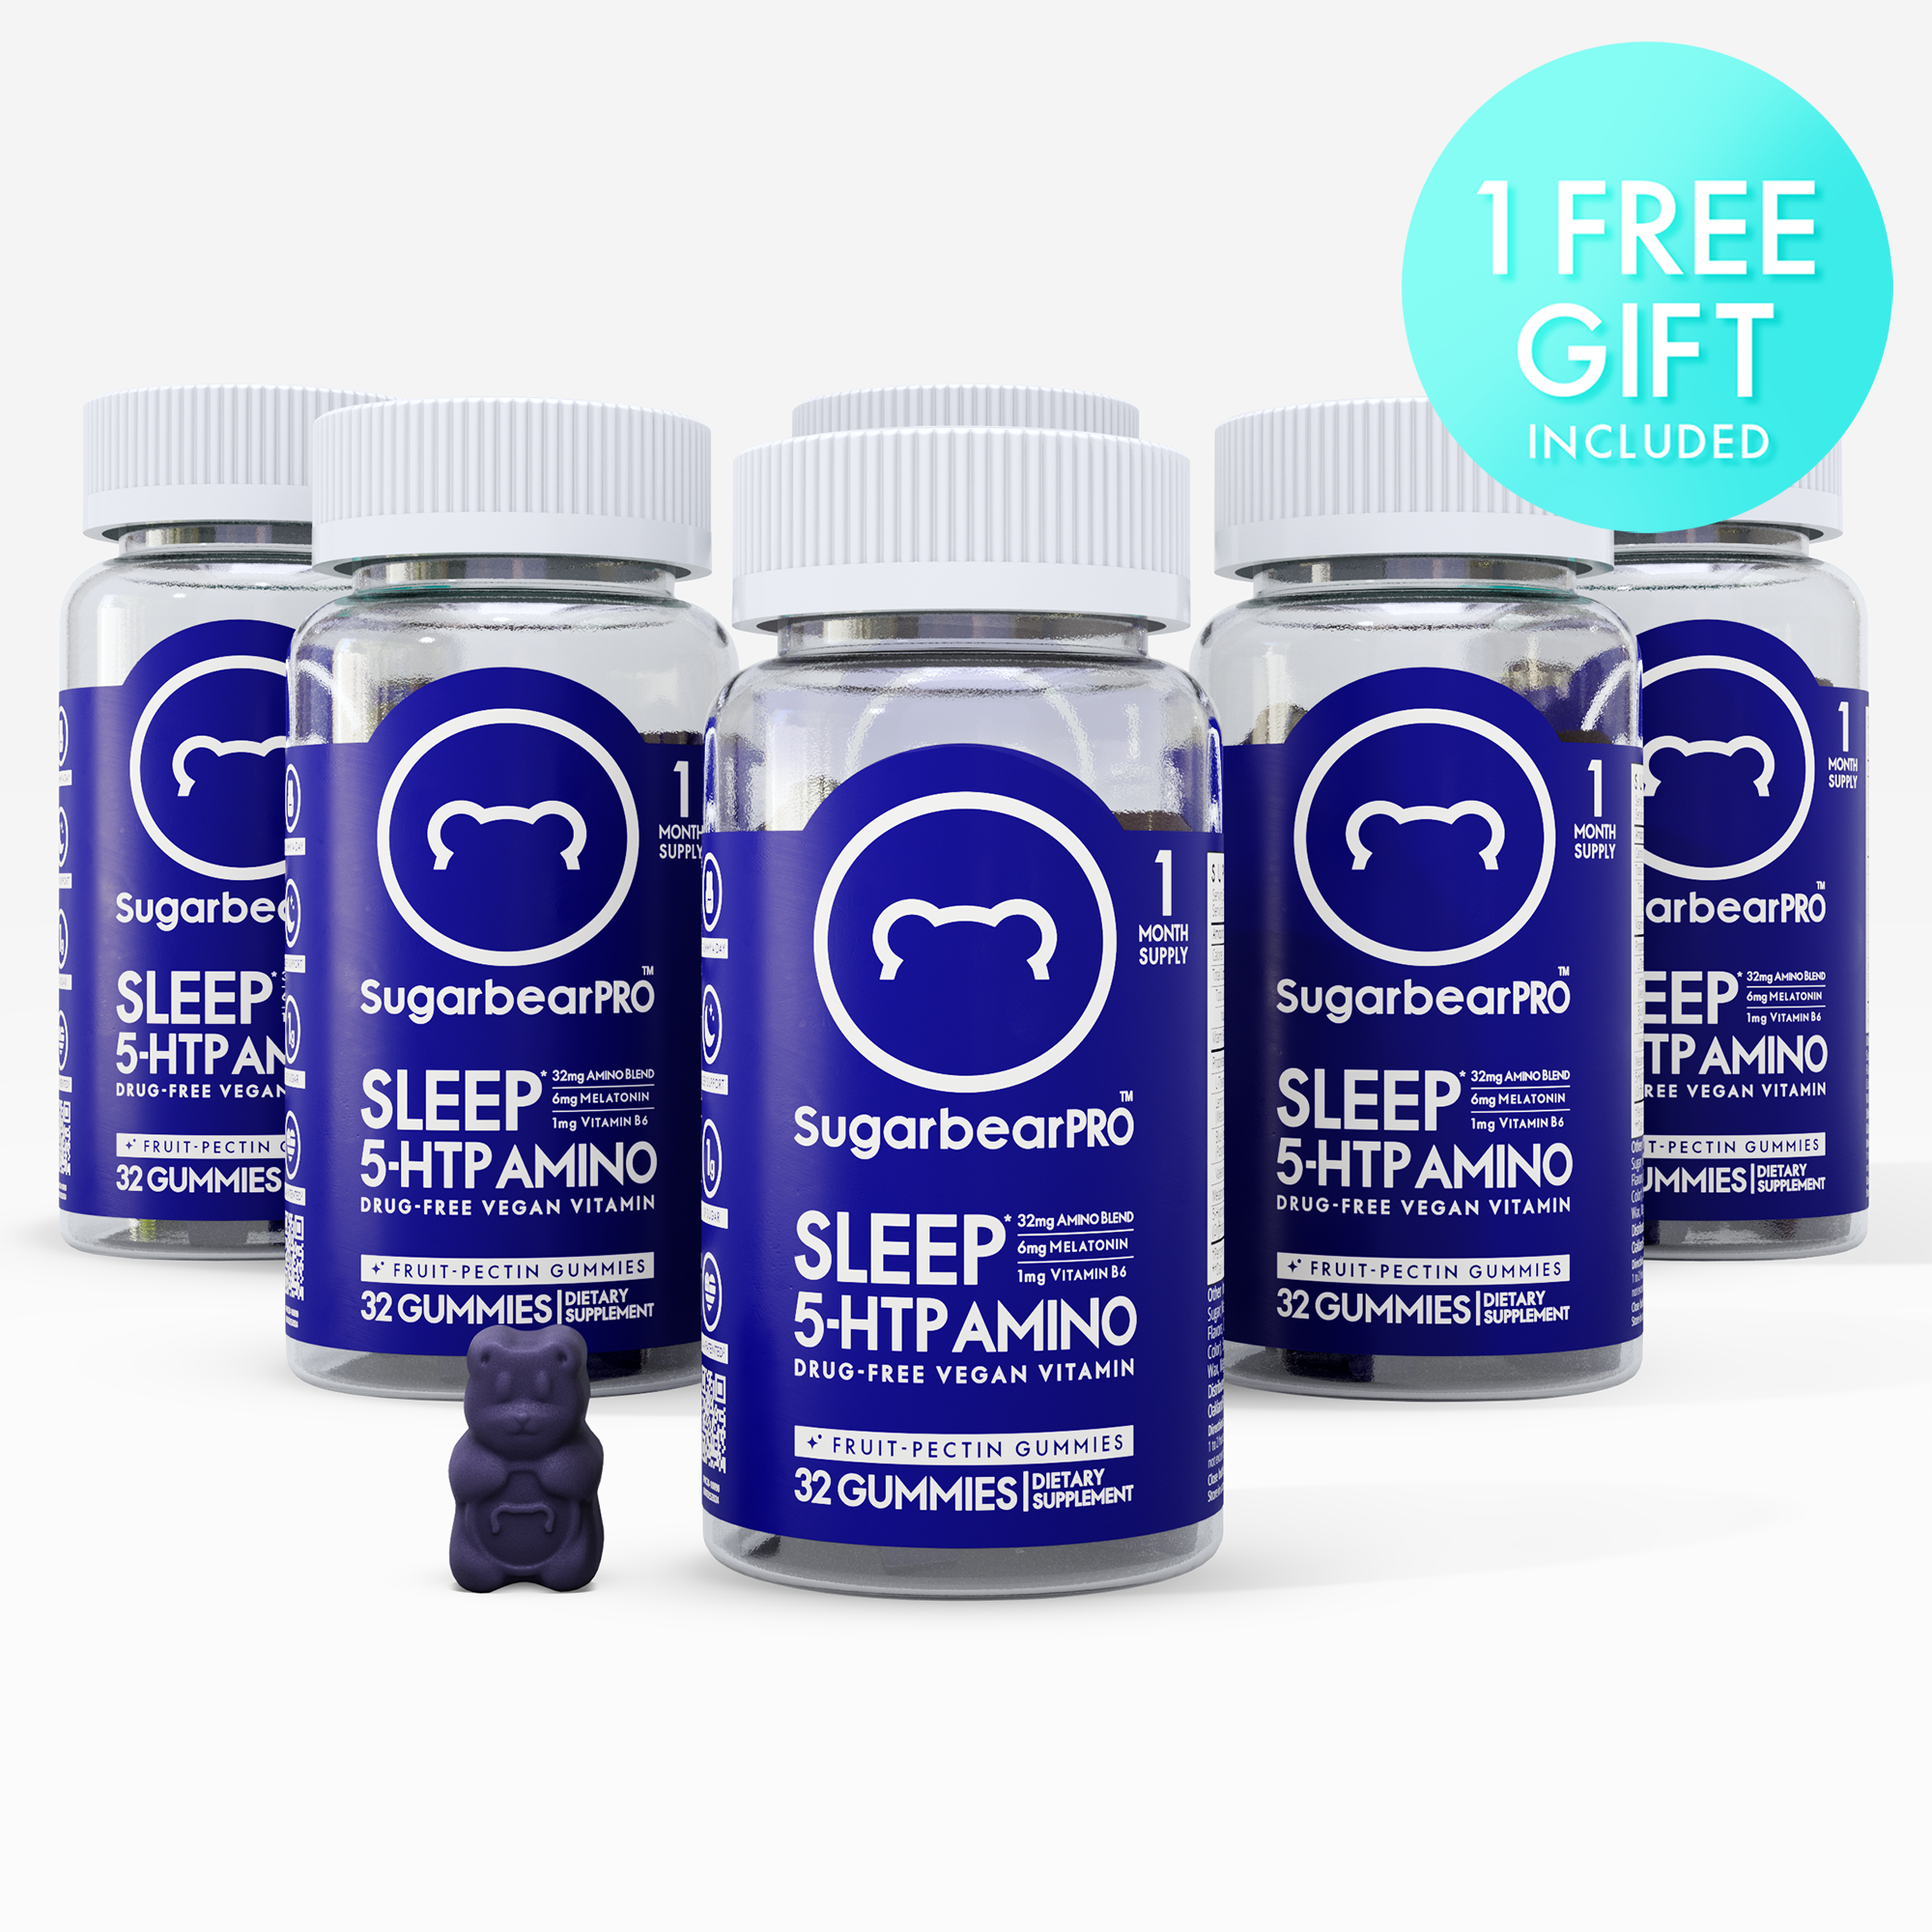 Sugarbear Sleep 5-HTP Amino Vitamin - 6 Month + Free Gift NTO